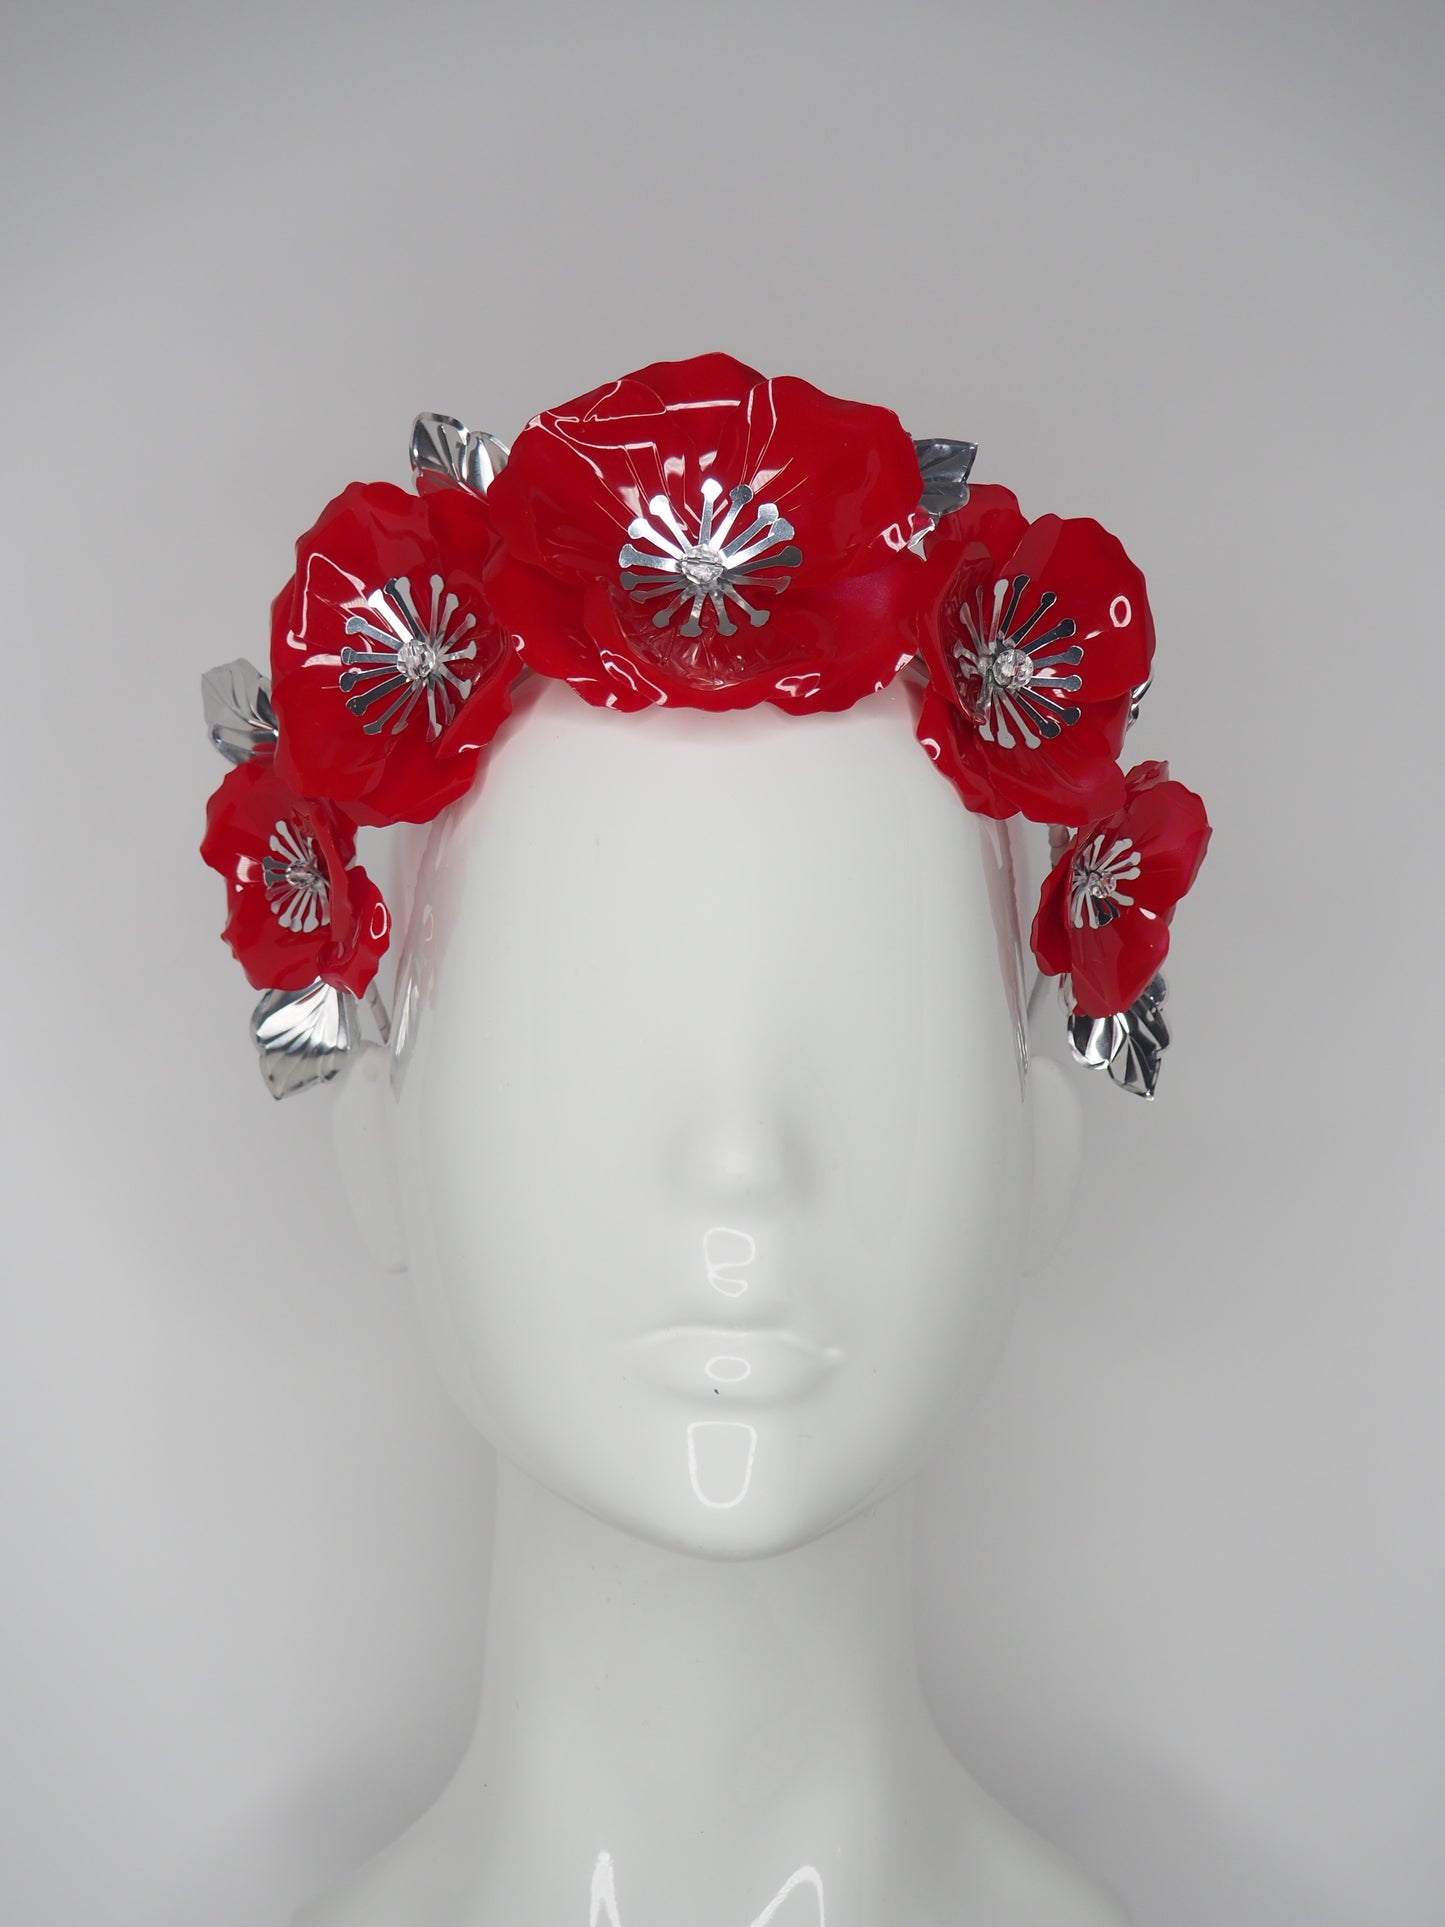 Princess poppy - Red Poppy headband with silver leaves